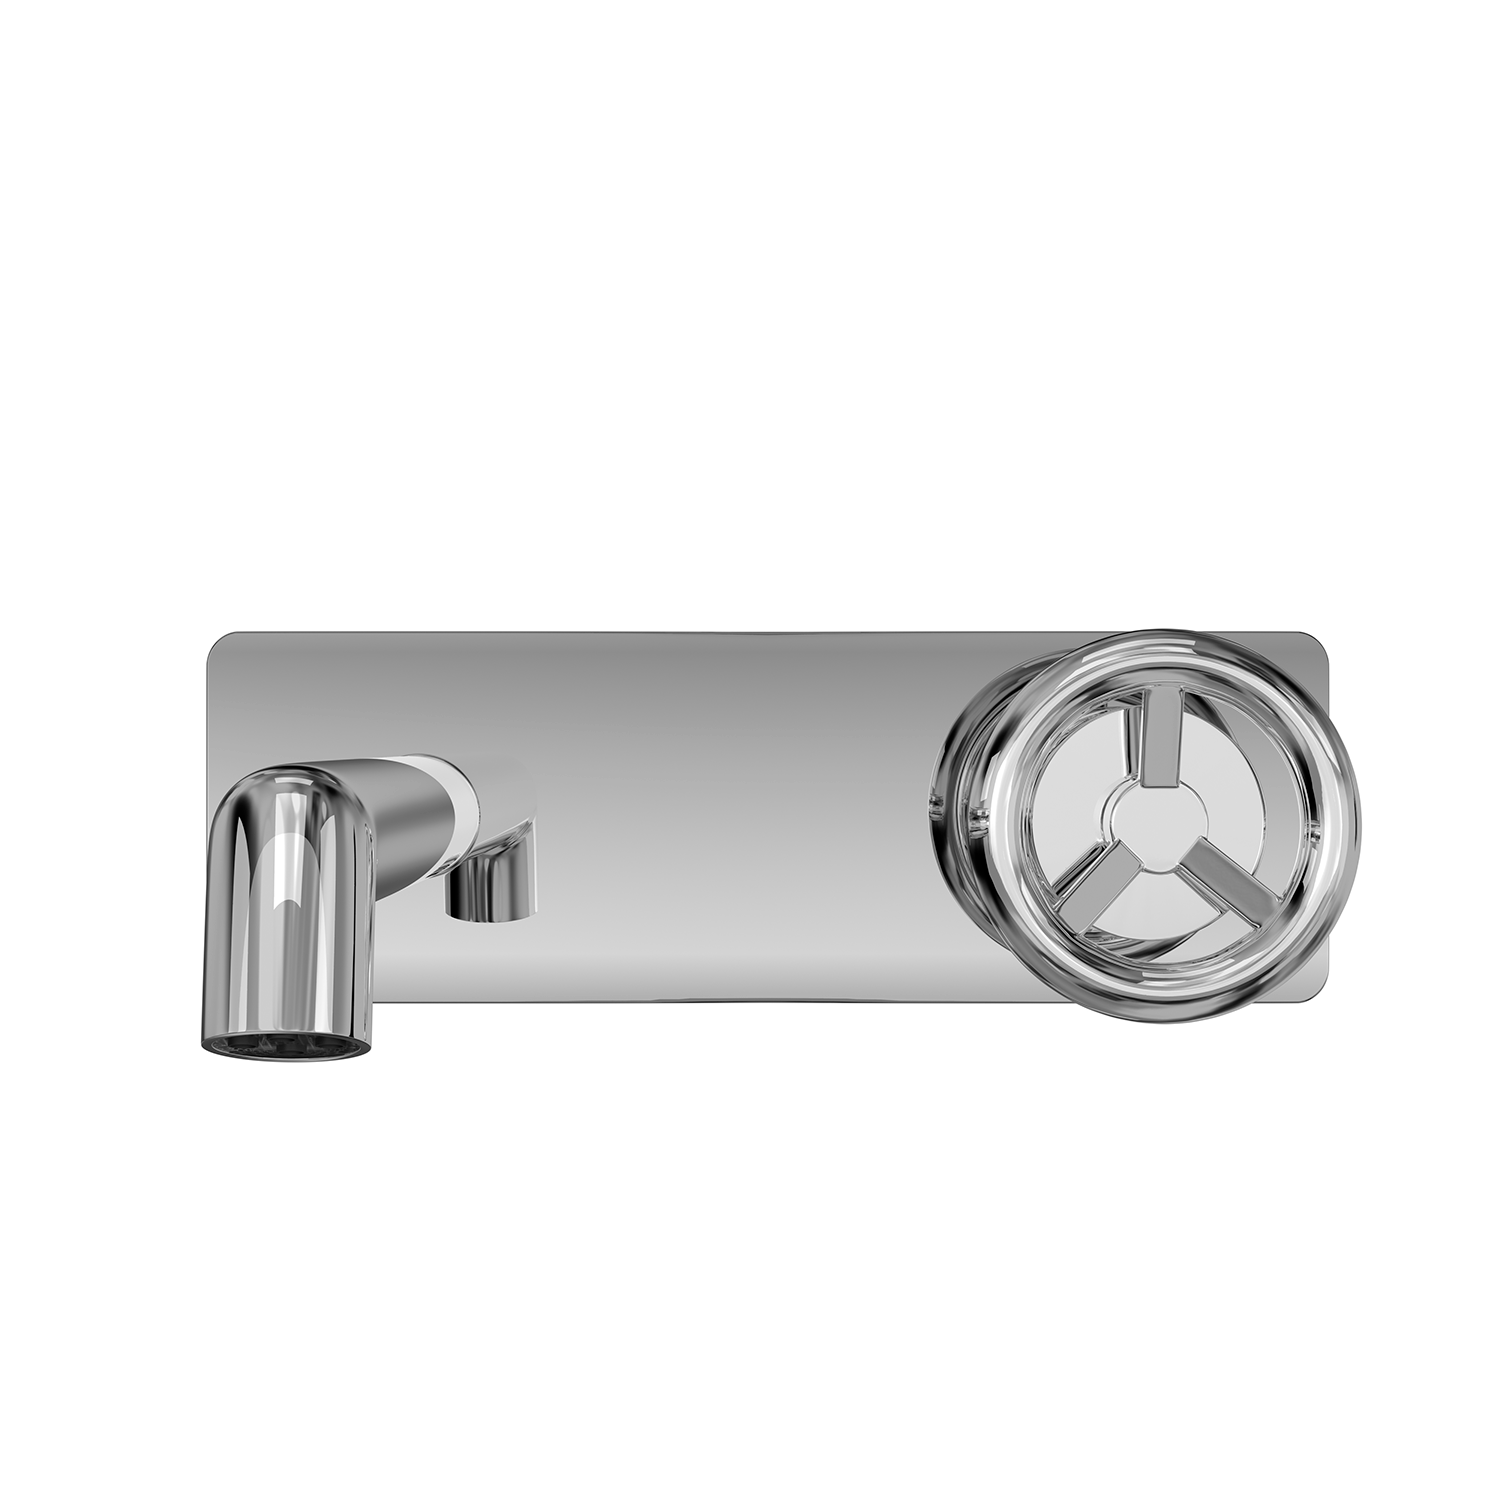 DAX Wall Mount Single Handle Bathroom Faucet Chrome Finish (DAX-8030044)